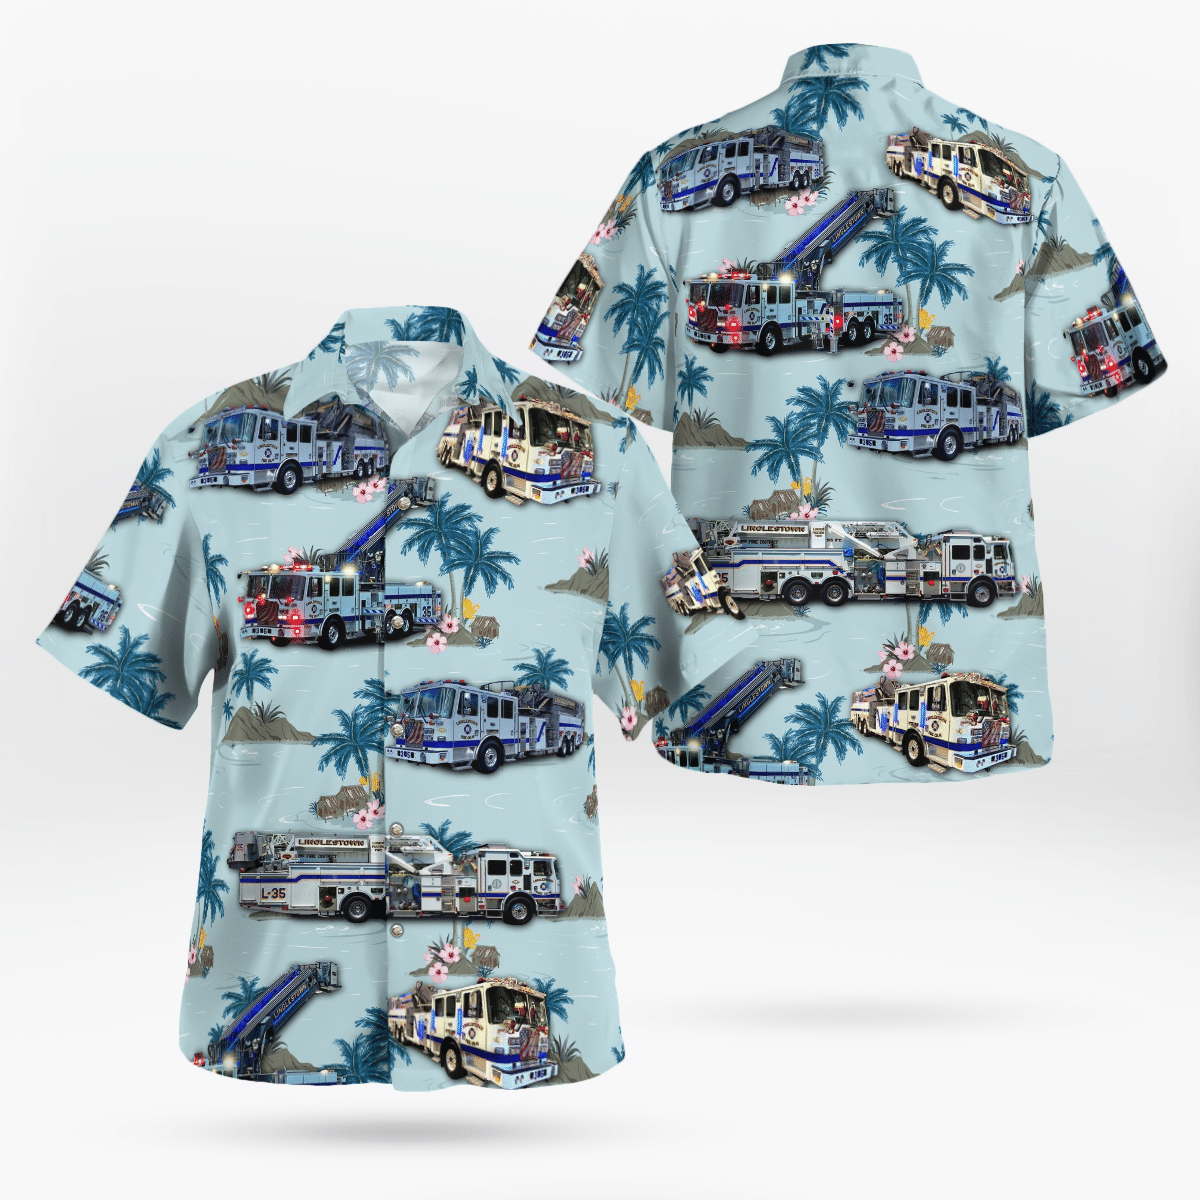 Listed below are some High-quality Aloha Shirt 37